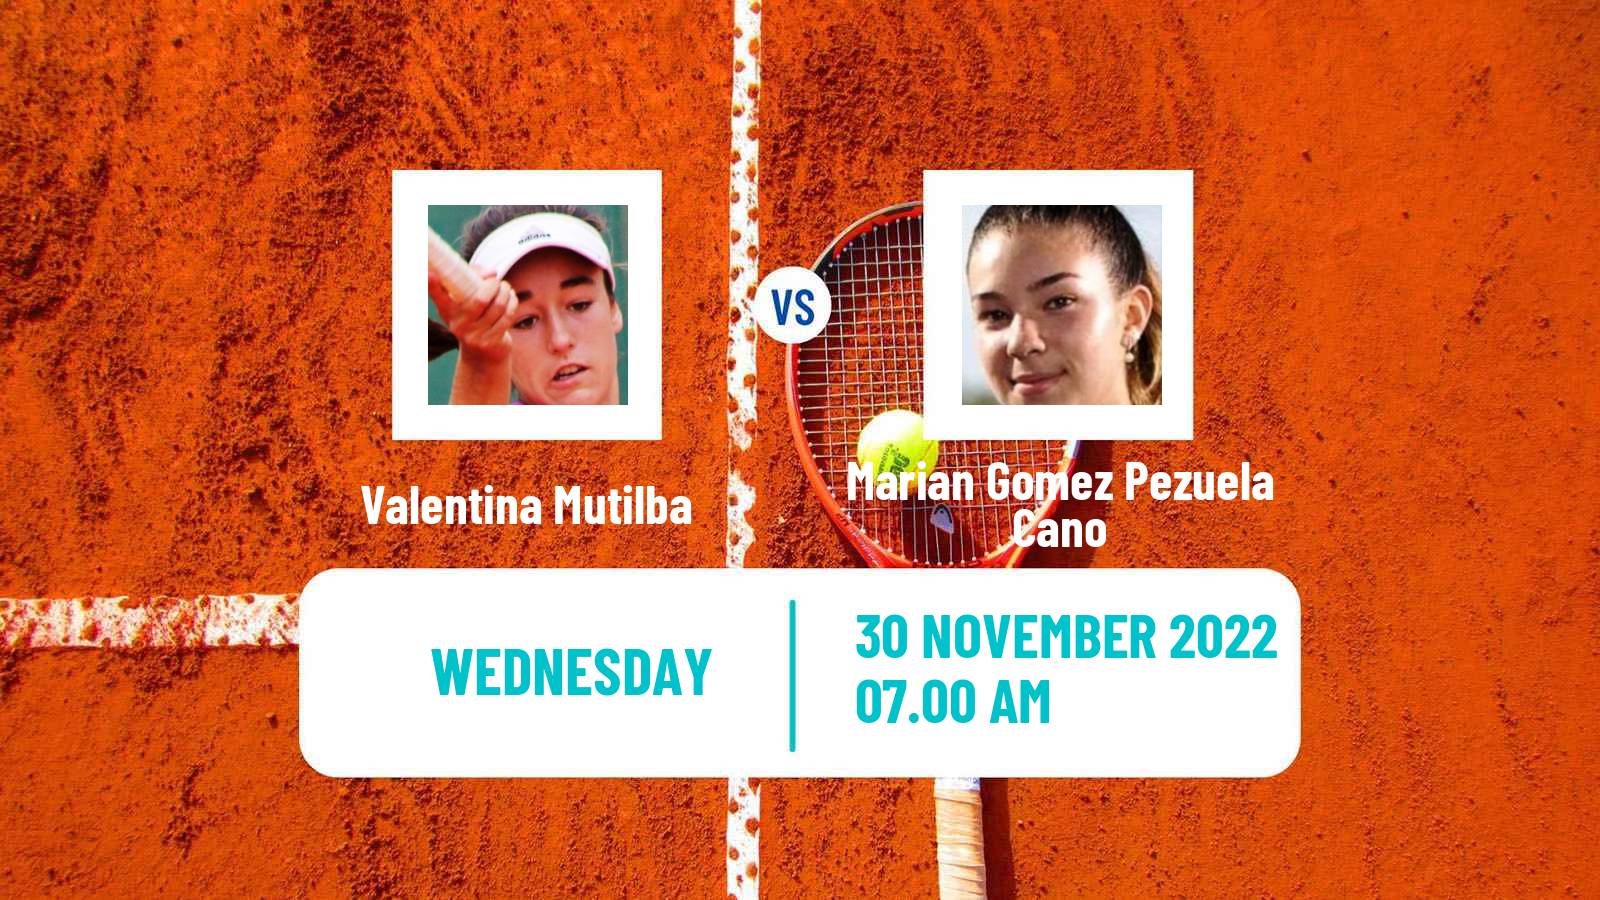 Tennis ITF Tournaments Valentina Mutilba - Marian Gomez Pezuela Cano